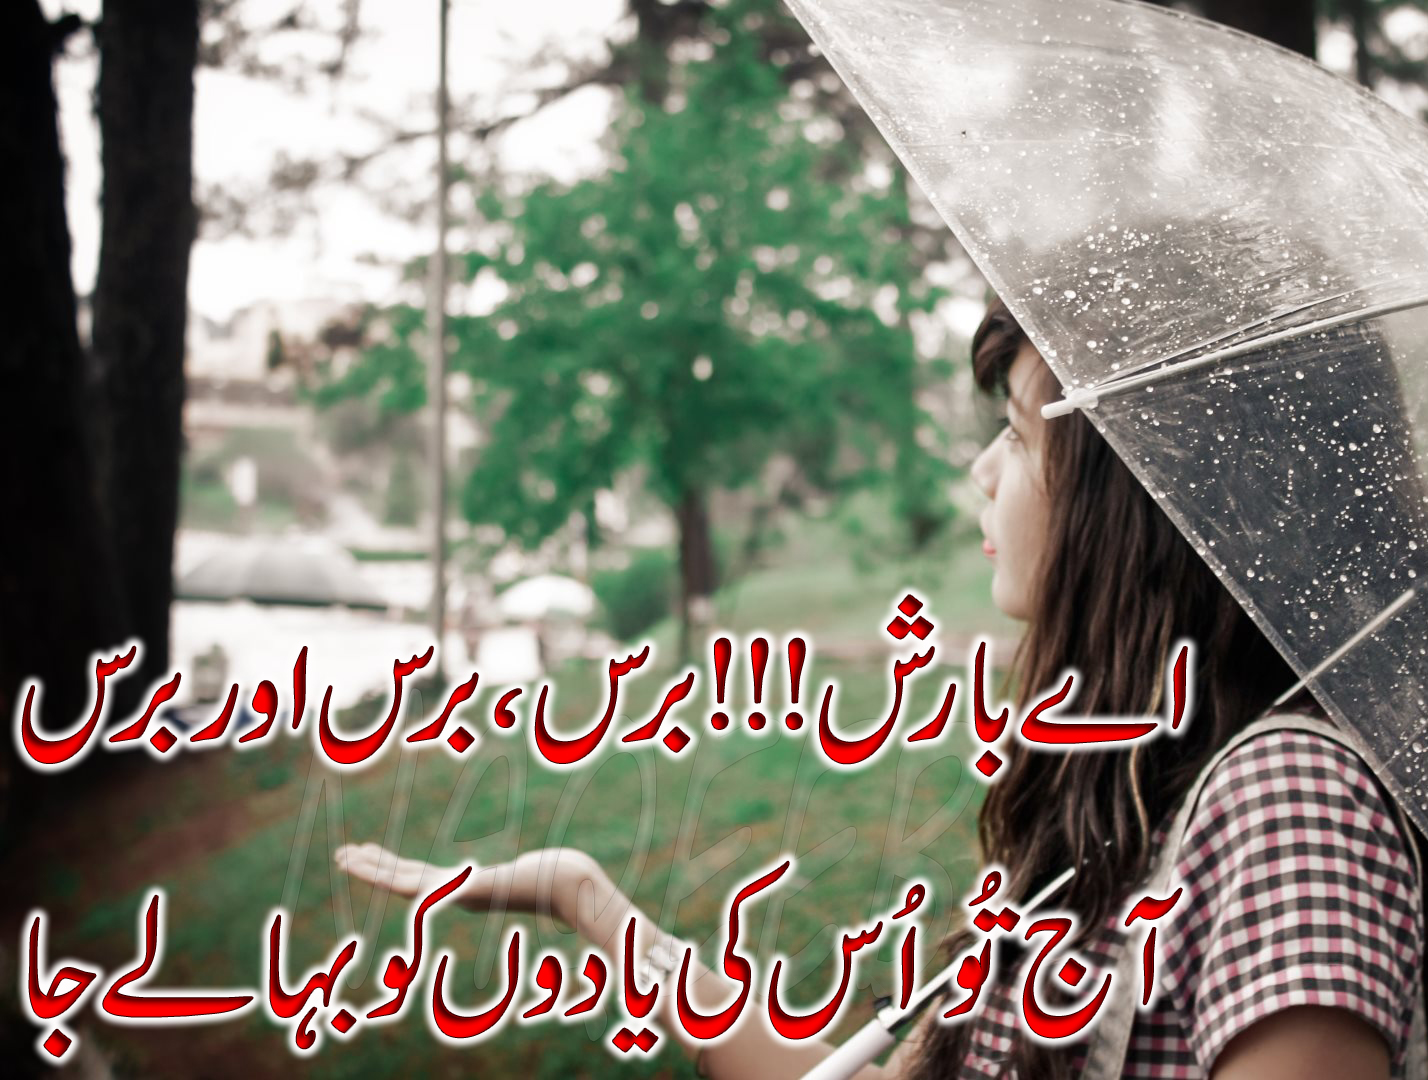 Barish qoyi. Status about Rain. Women Fashion Urdu Poetry. Sad Poetry. Rain лучший